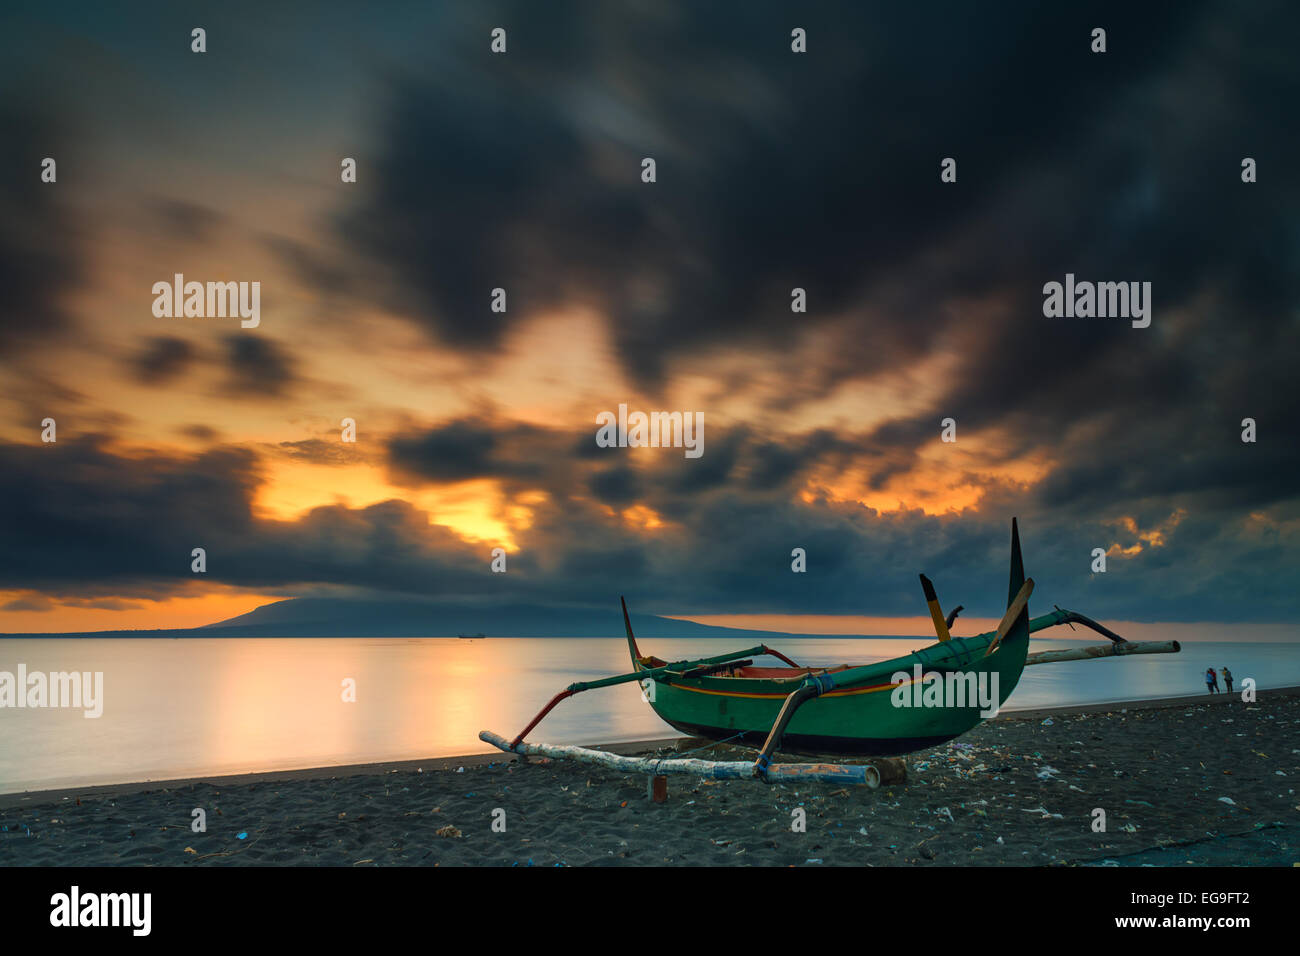 Indonesia, Banyuwangi, Santen Island, Sunrise on beach with fishing boat in foreground Stock Photo